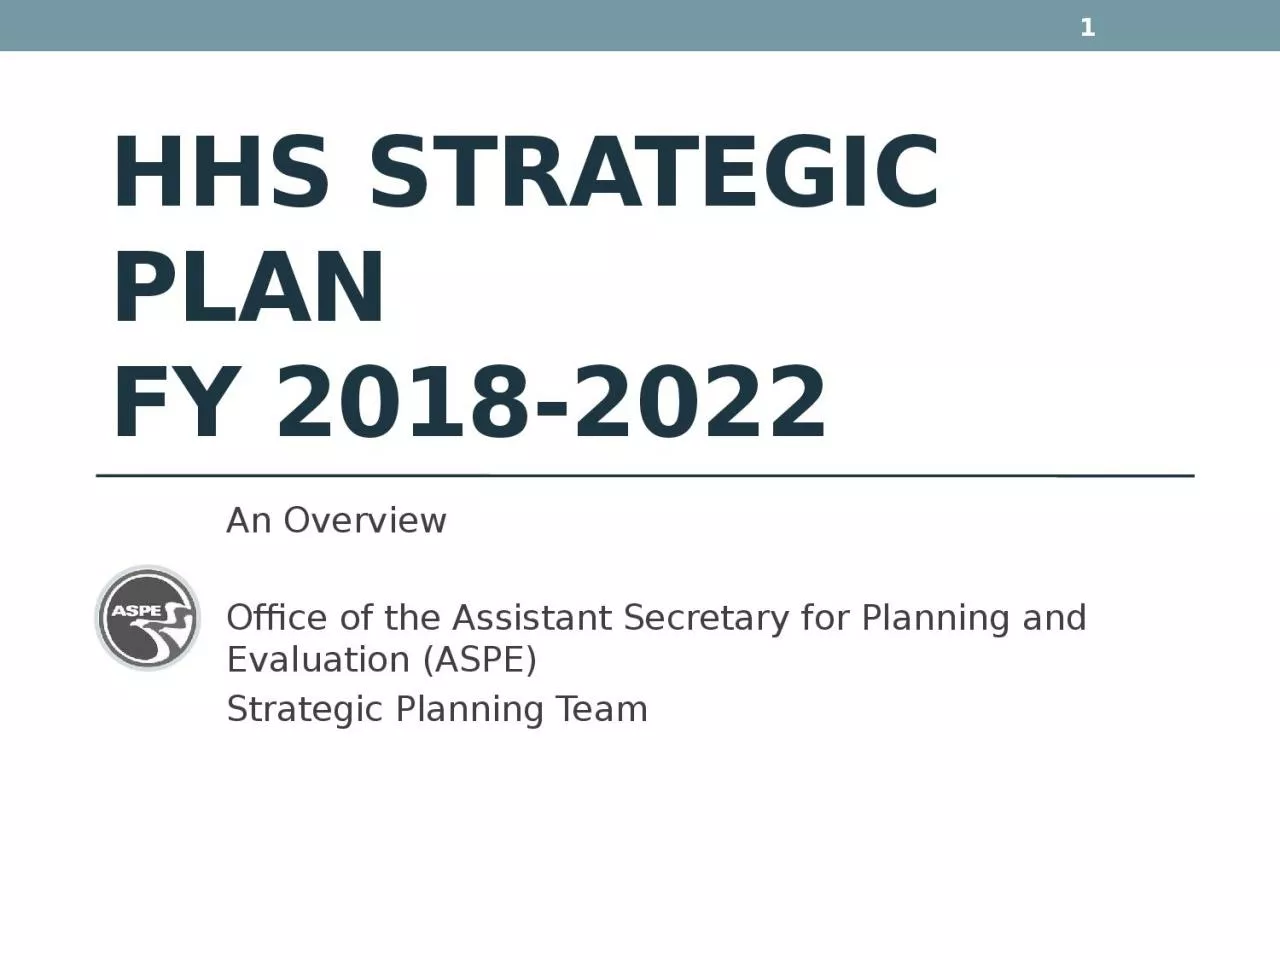 HHS Strategic plan  fy  2018-2022